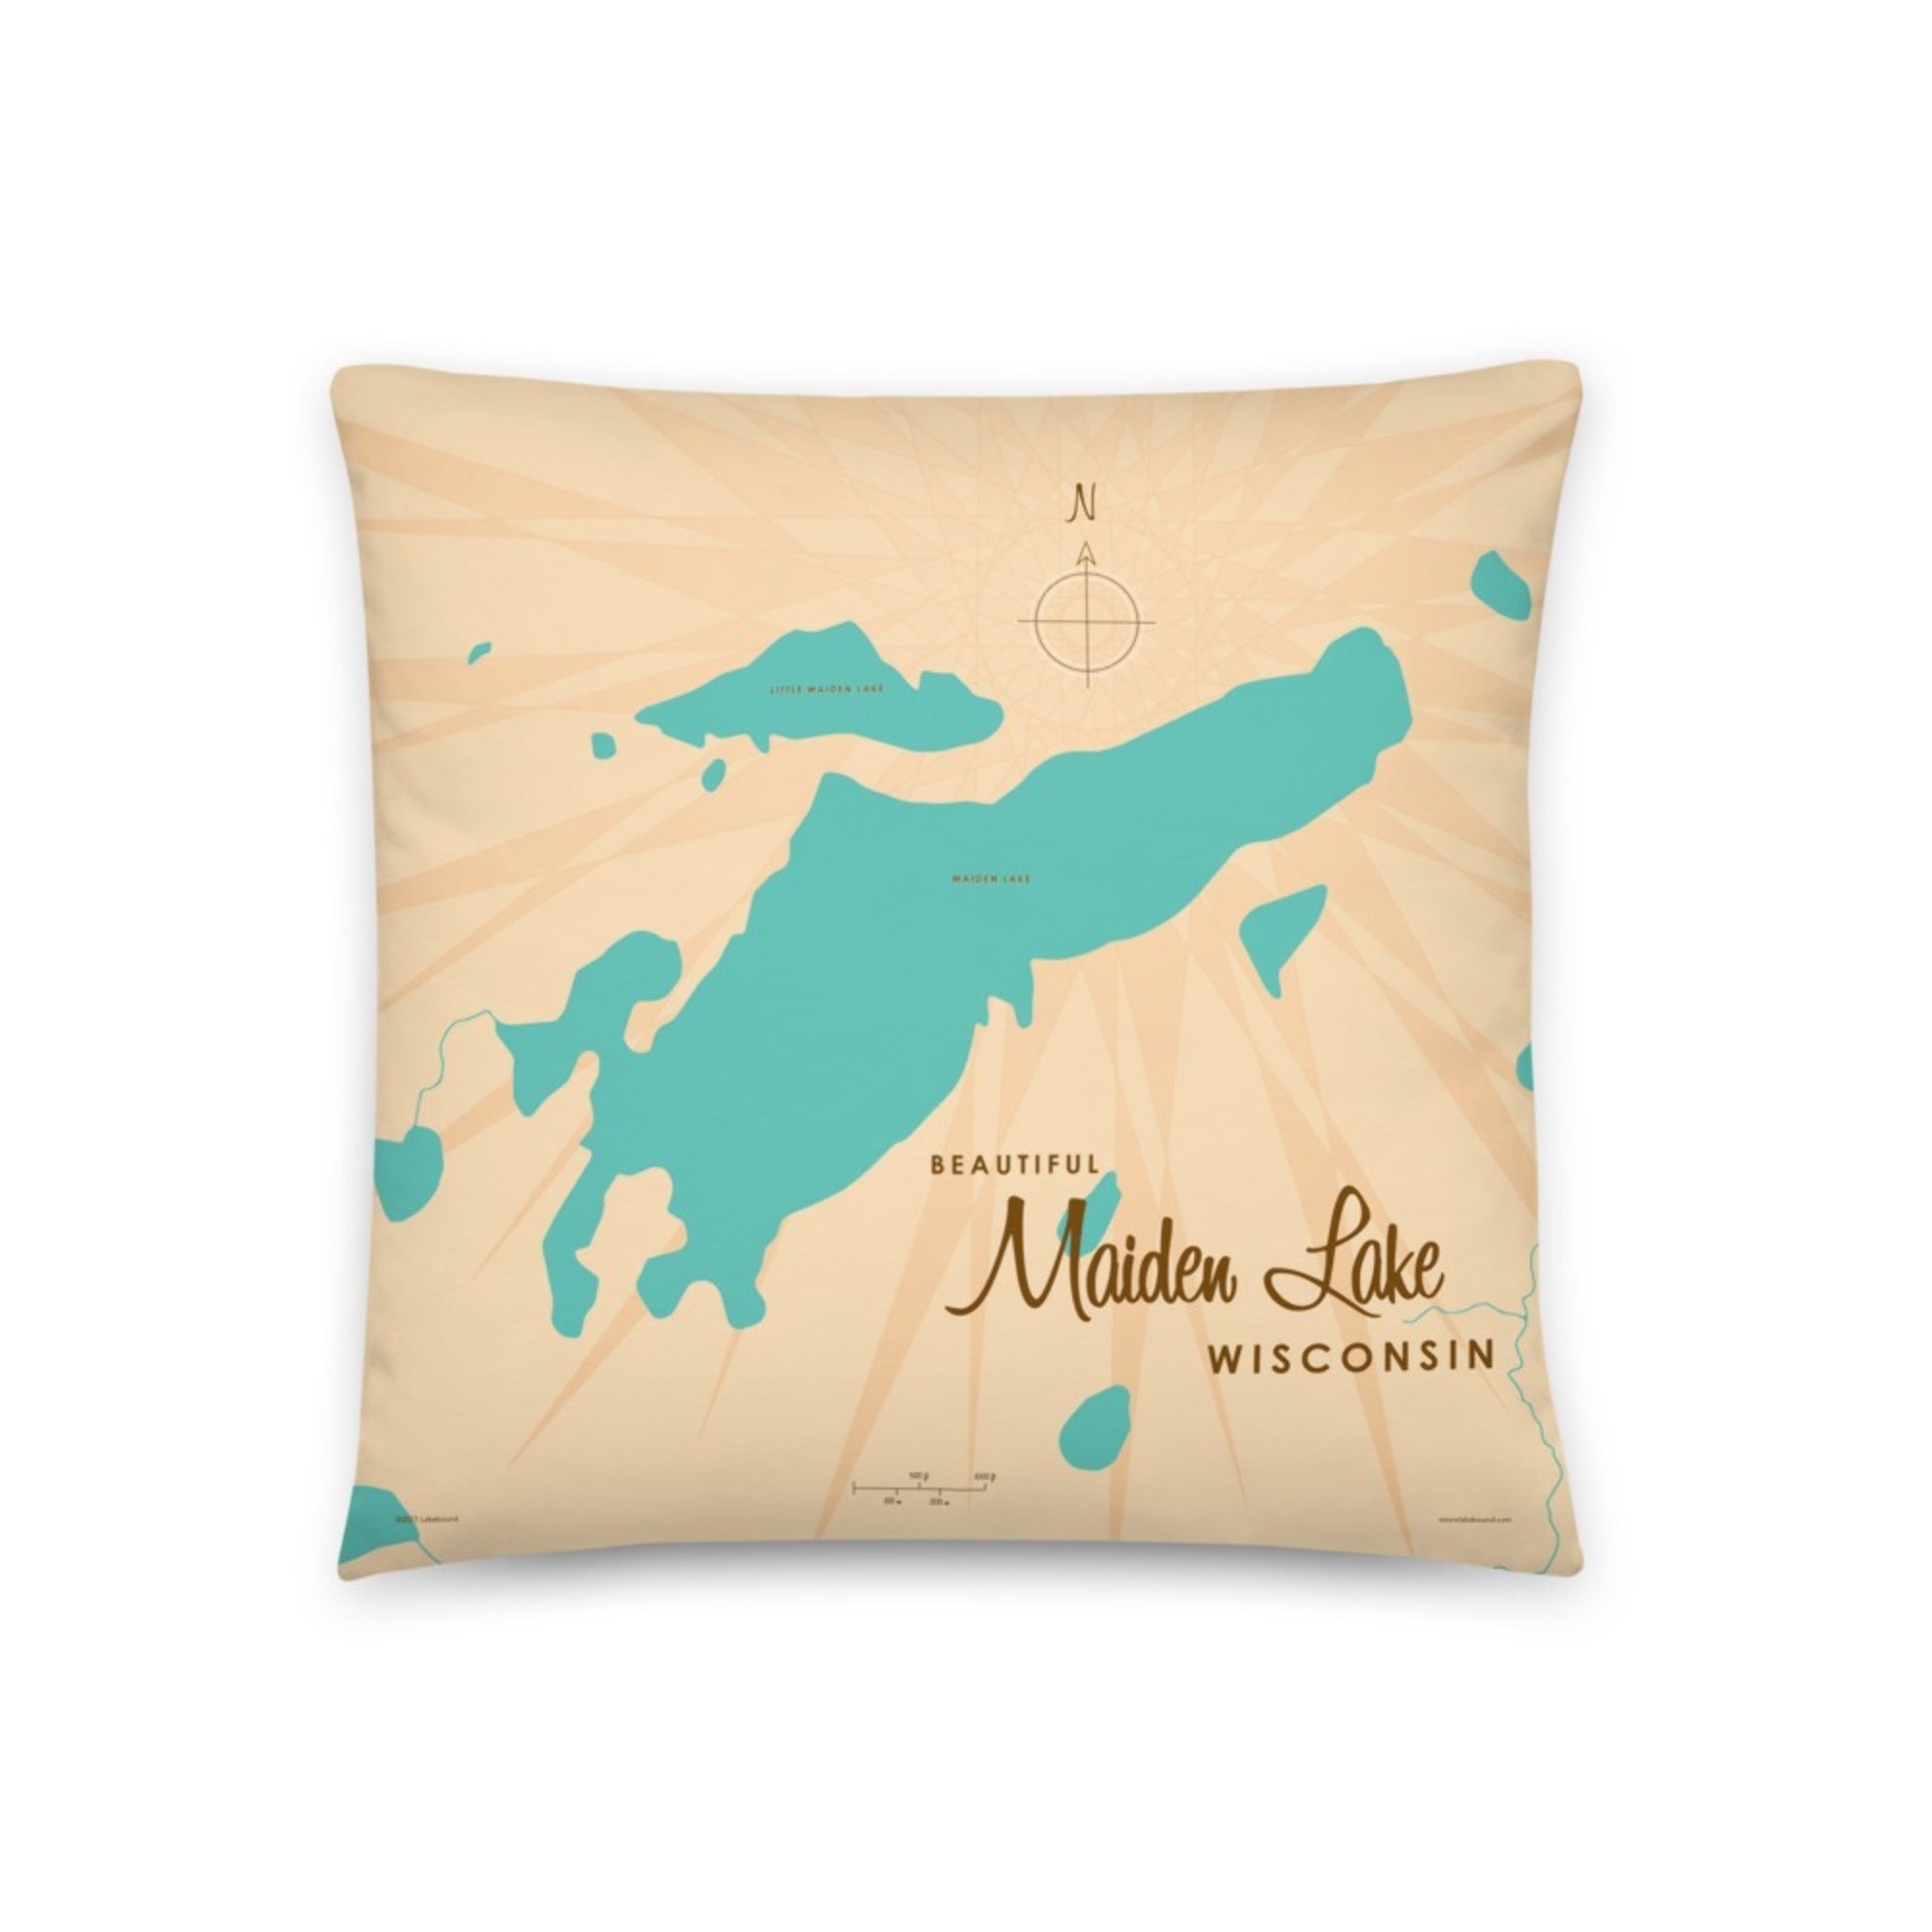 Maiden Lake Wisconsin Pillow